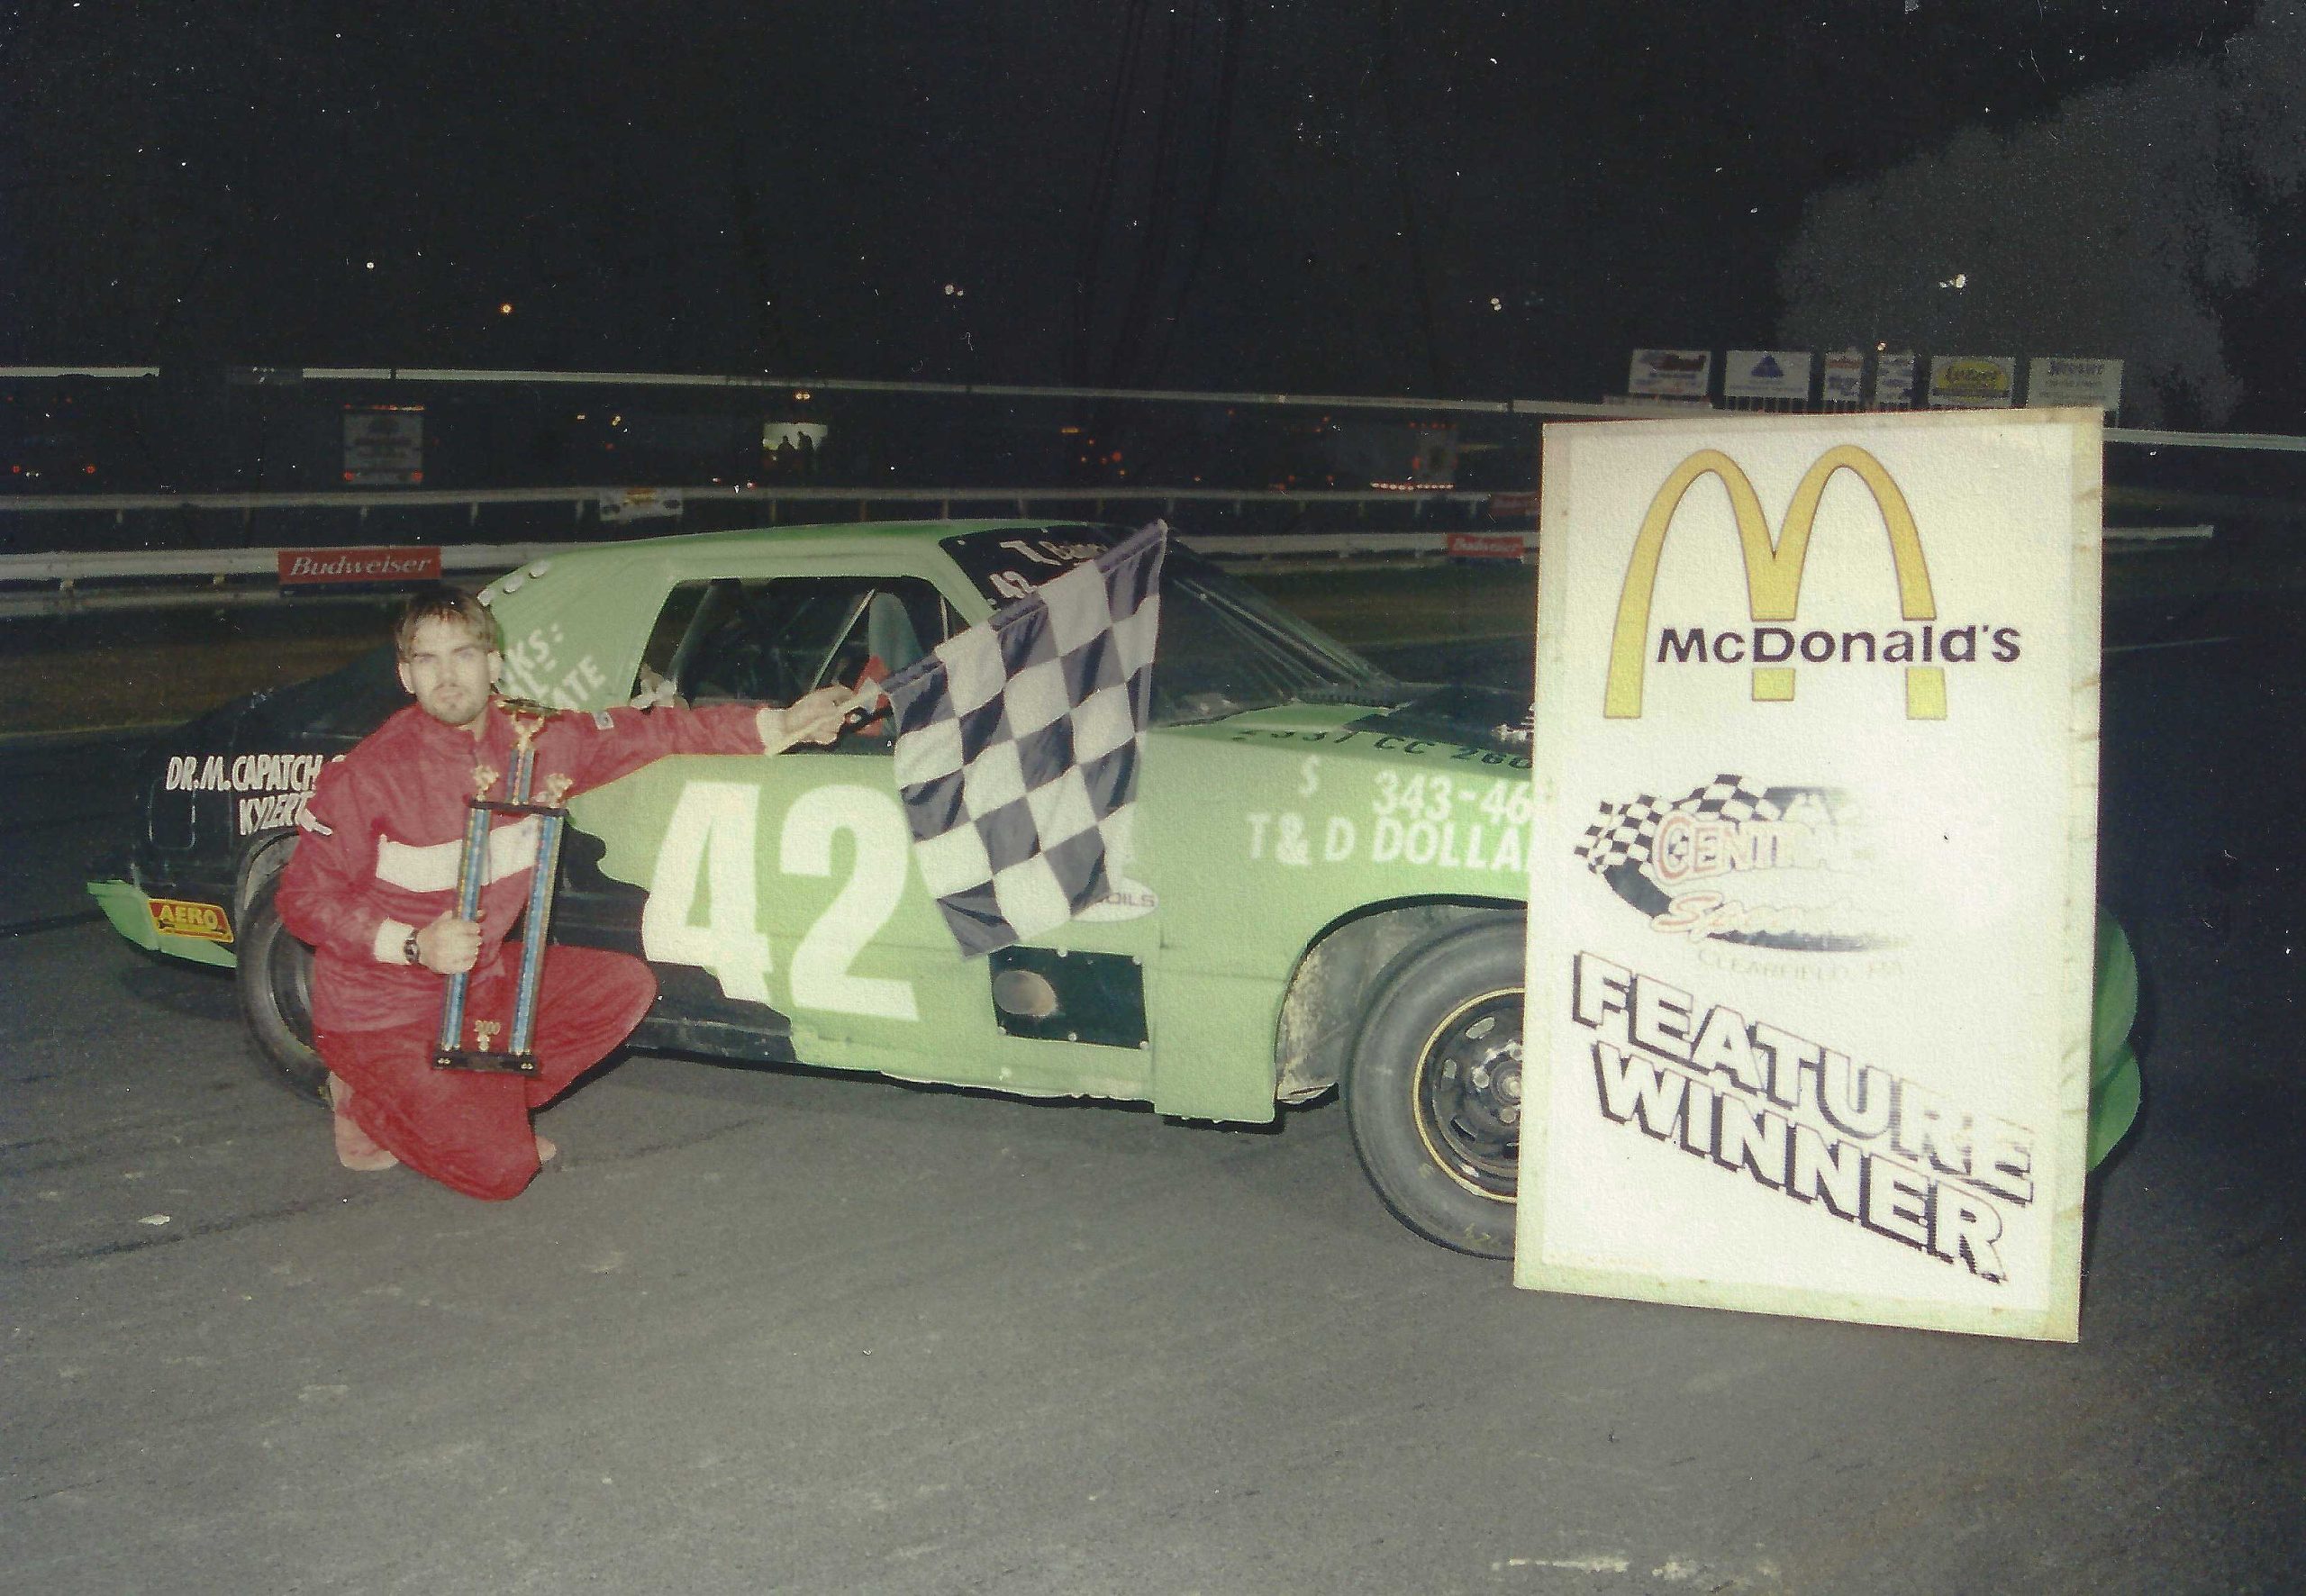 1998, UMI’s future maintenance technician, Corey Timblin wins in his 1986 Ford Mustang.